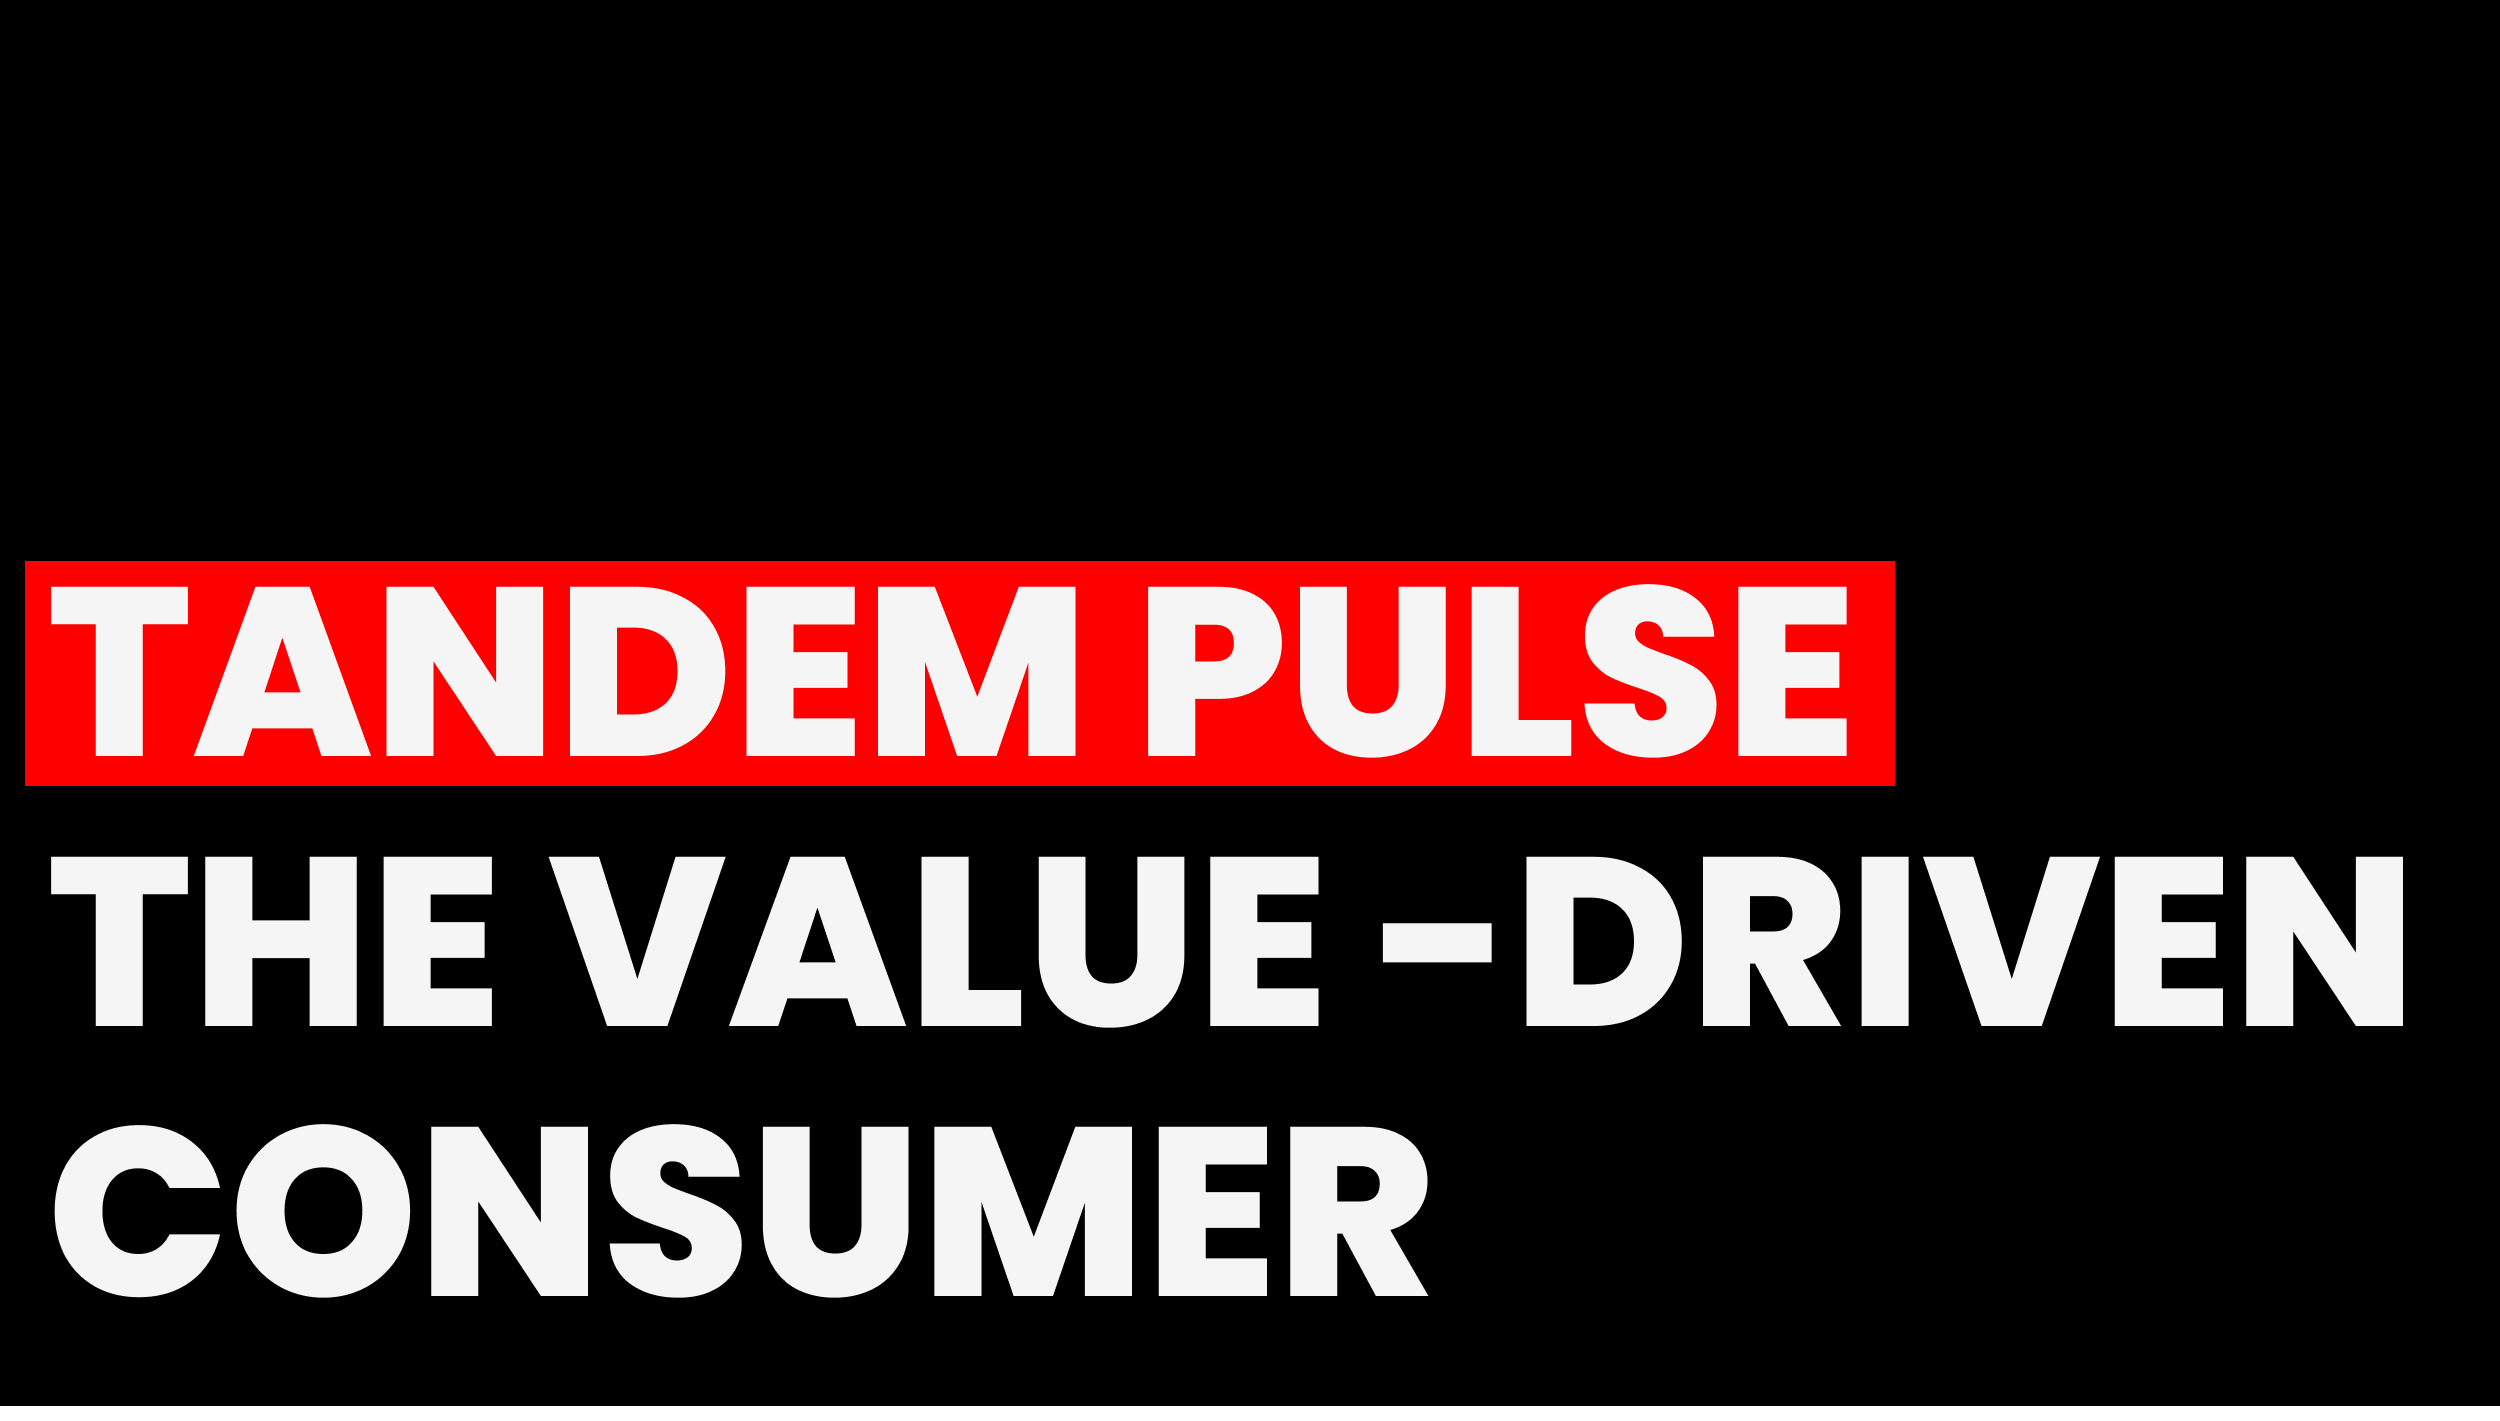 Tandem pulse: the value-driven consumer